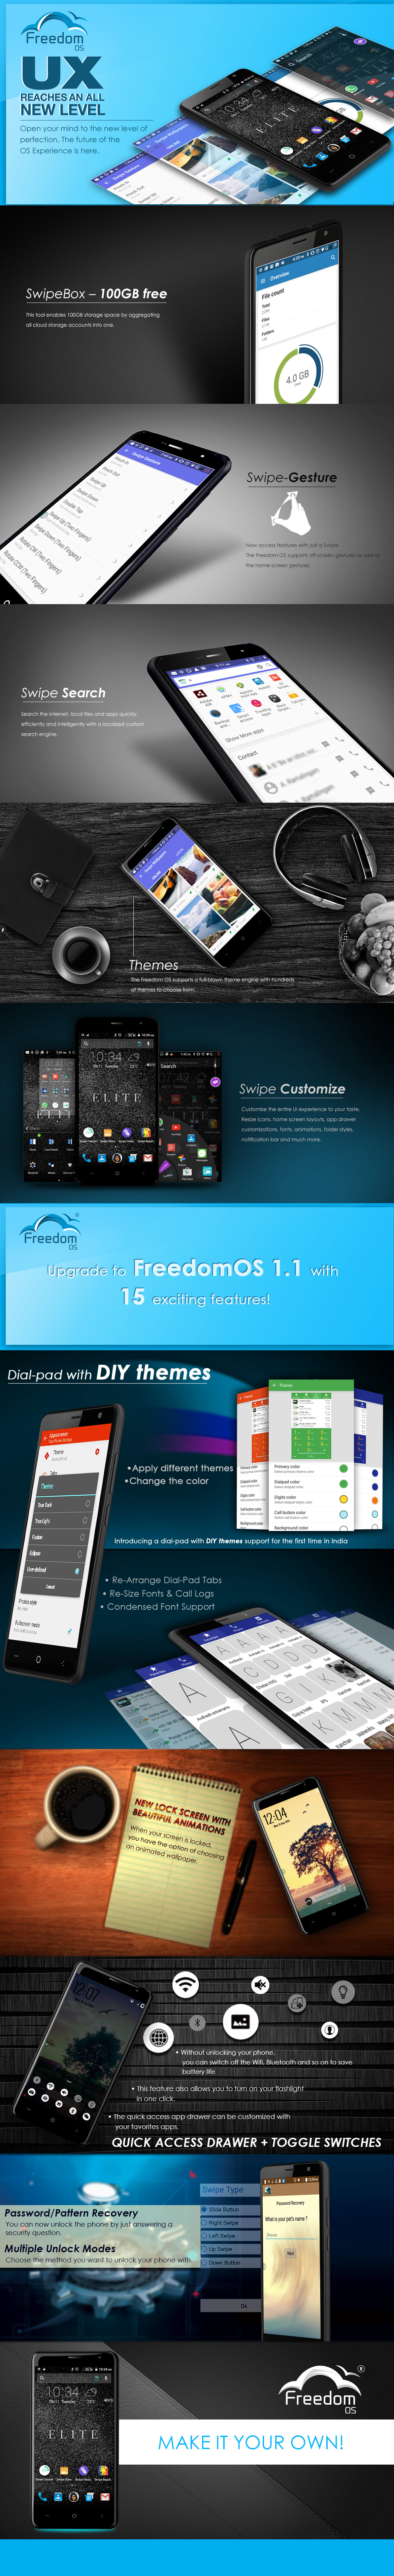 freedom-app-webpage